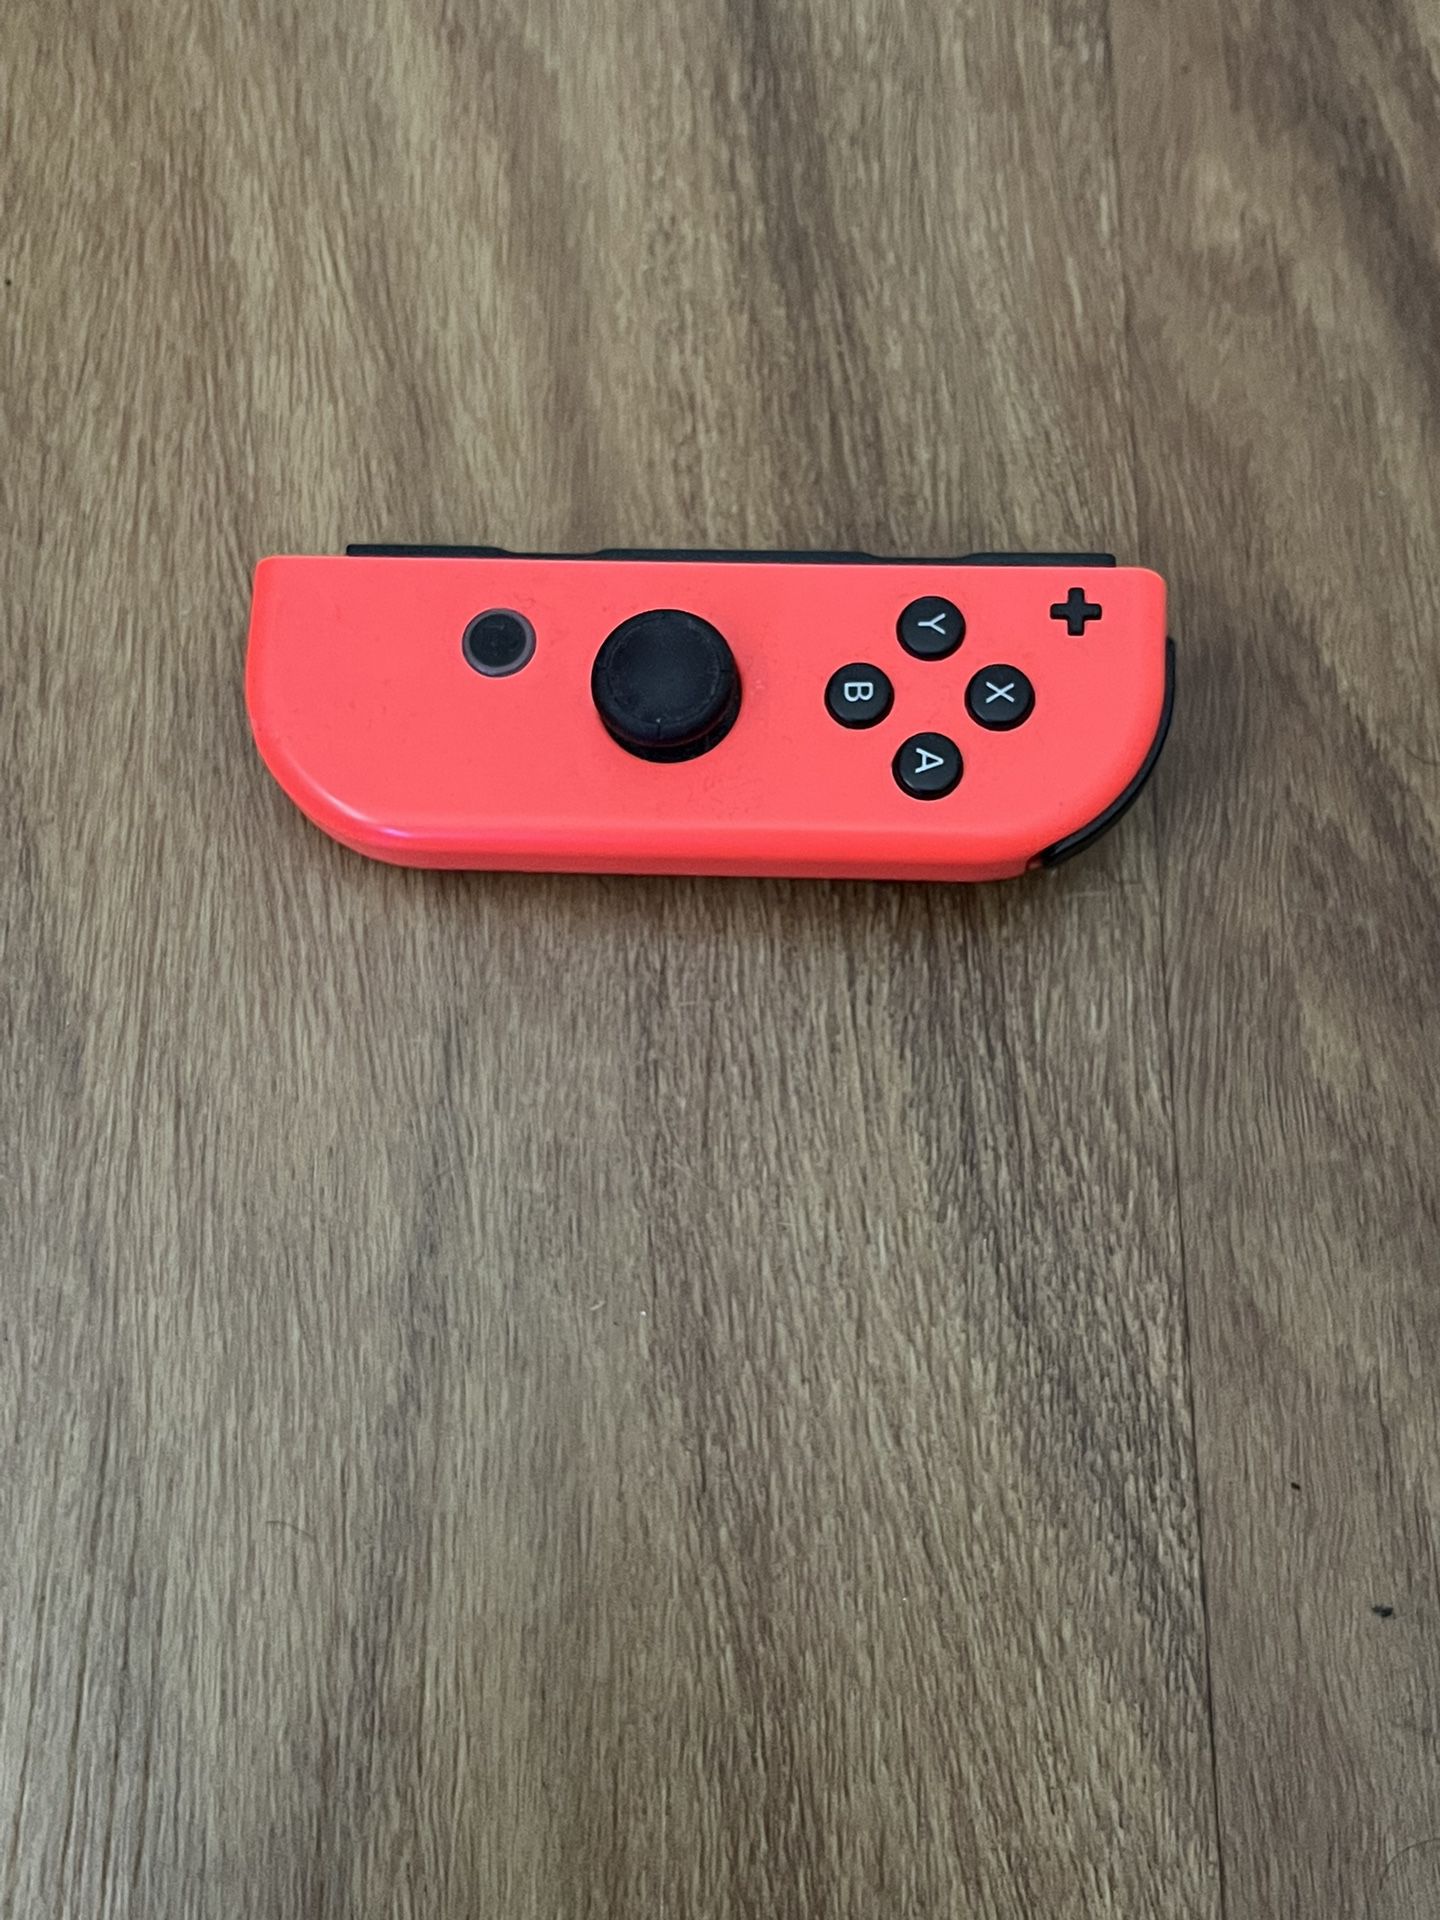 Nintendo Switch Right Joycon (red)